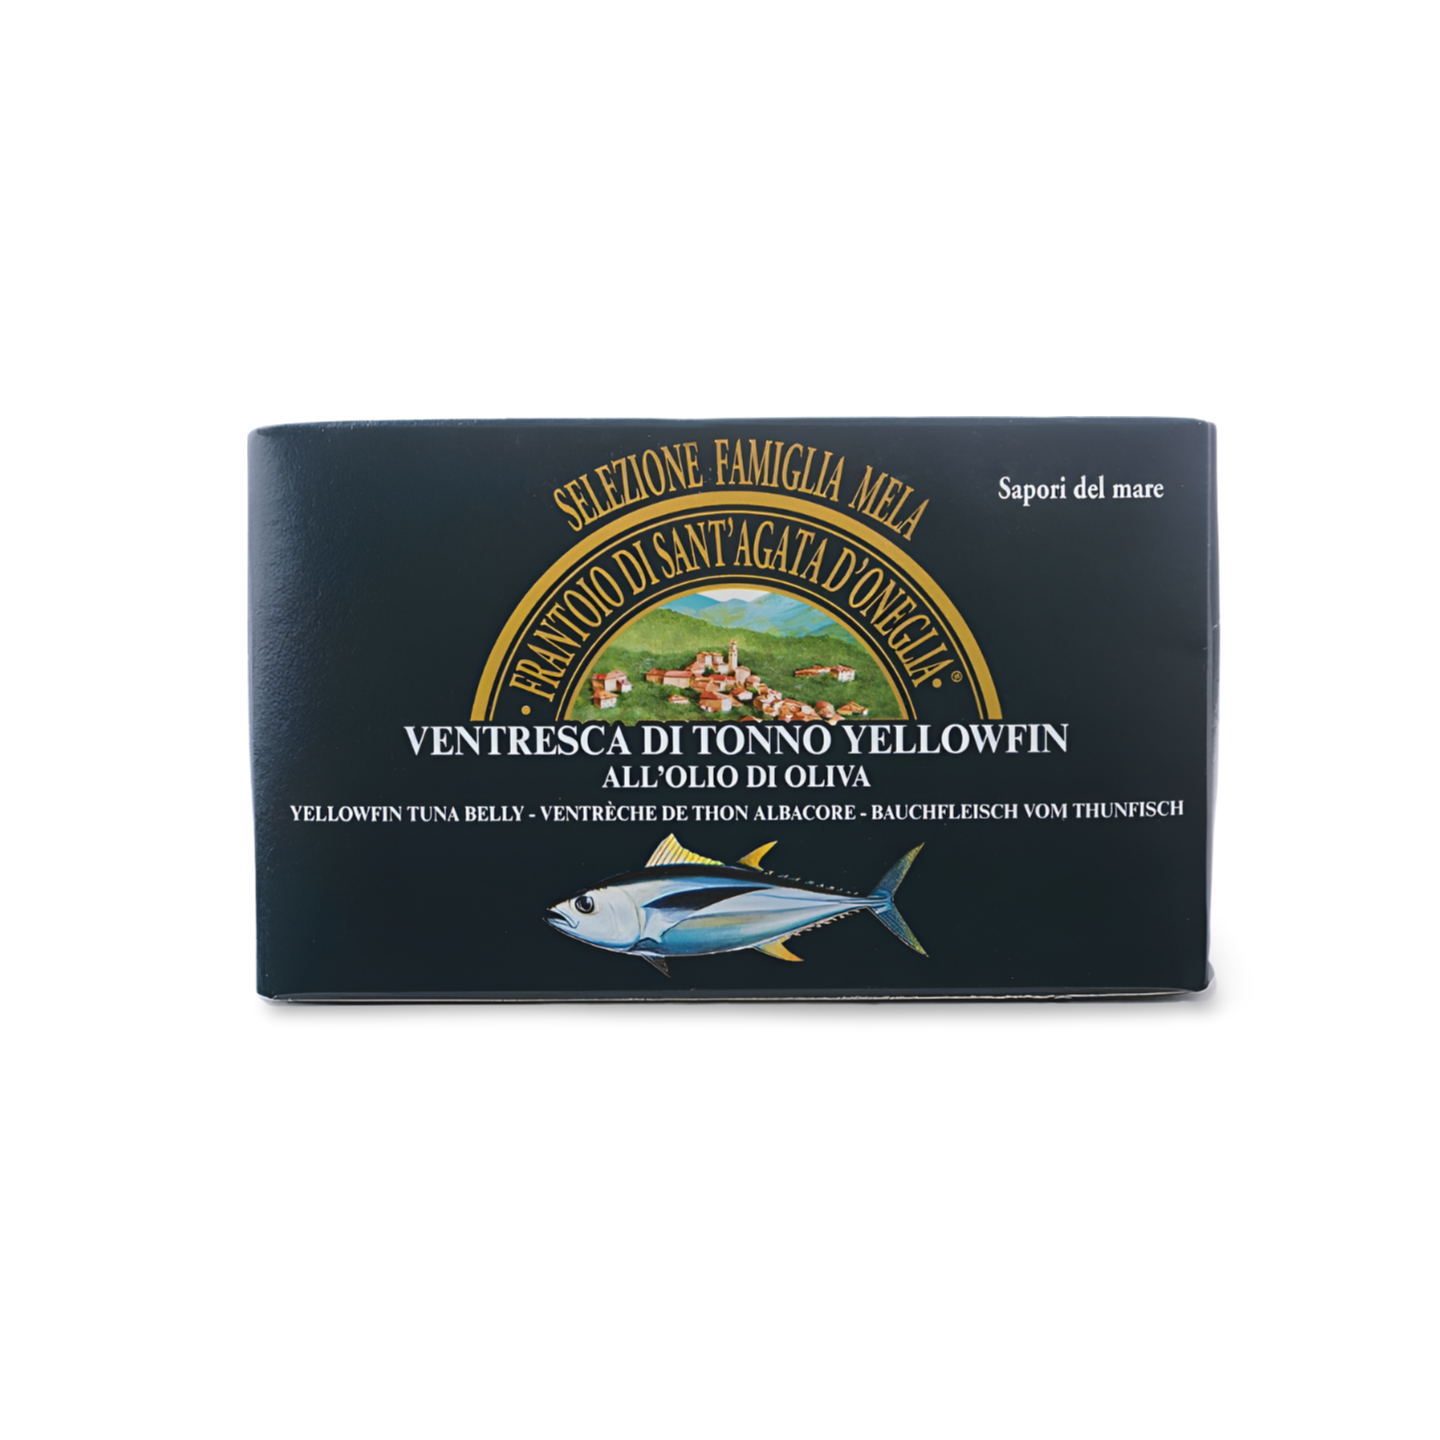 Bauchfleisch vom Thunfisch VENTRESCA DI TONNO YELLOFIN IN OLIO DI OLIVA, 111gr